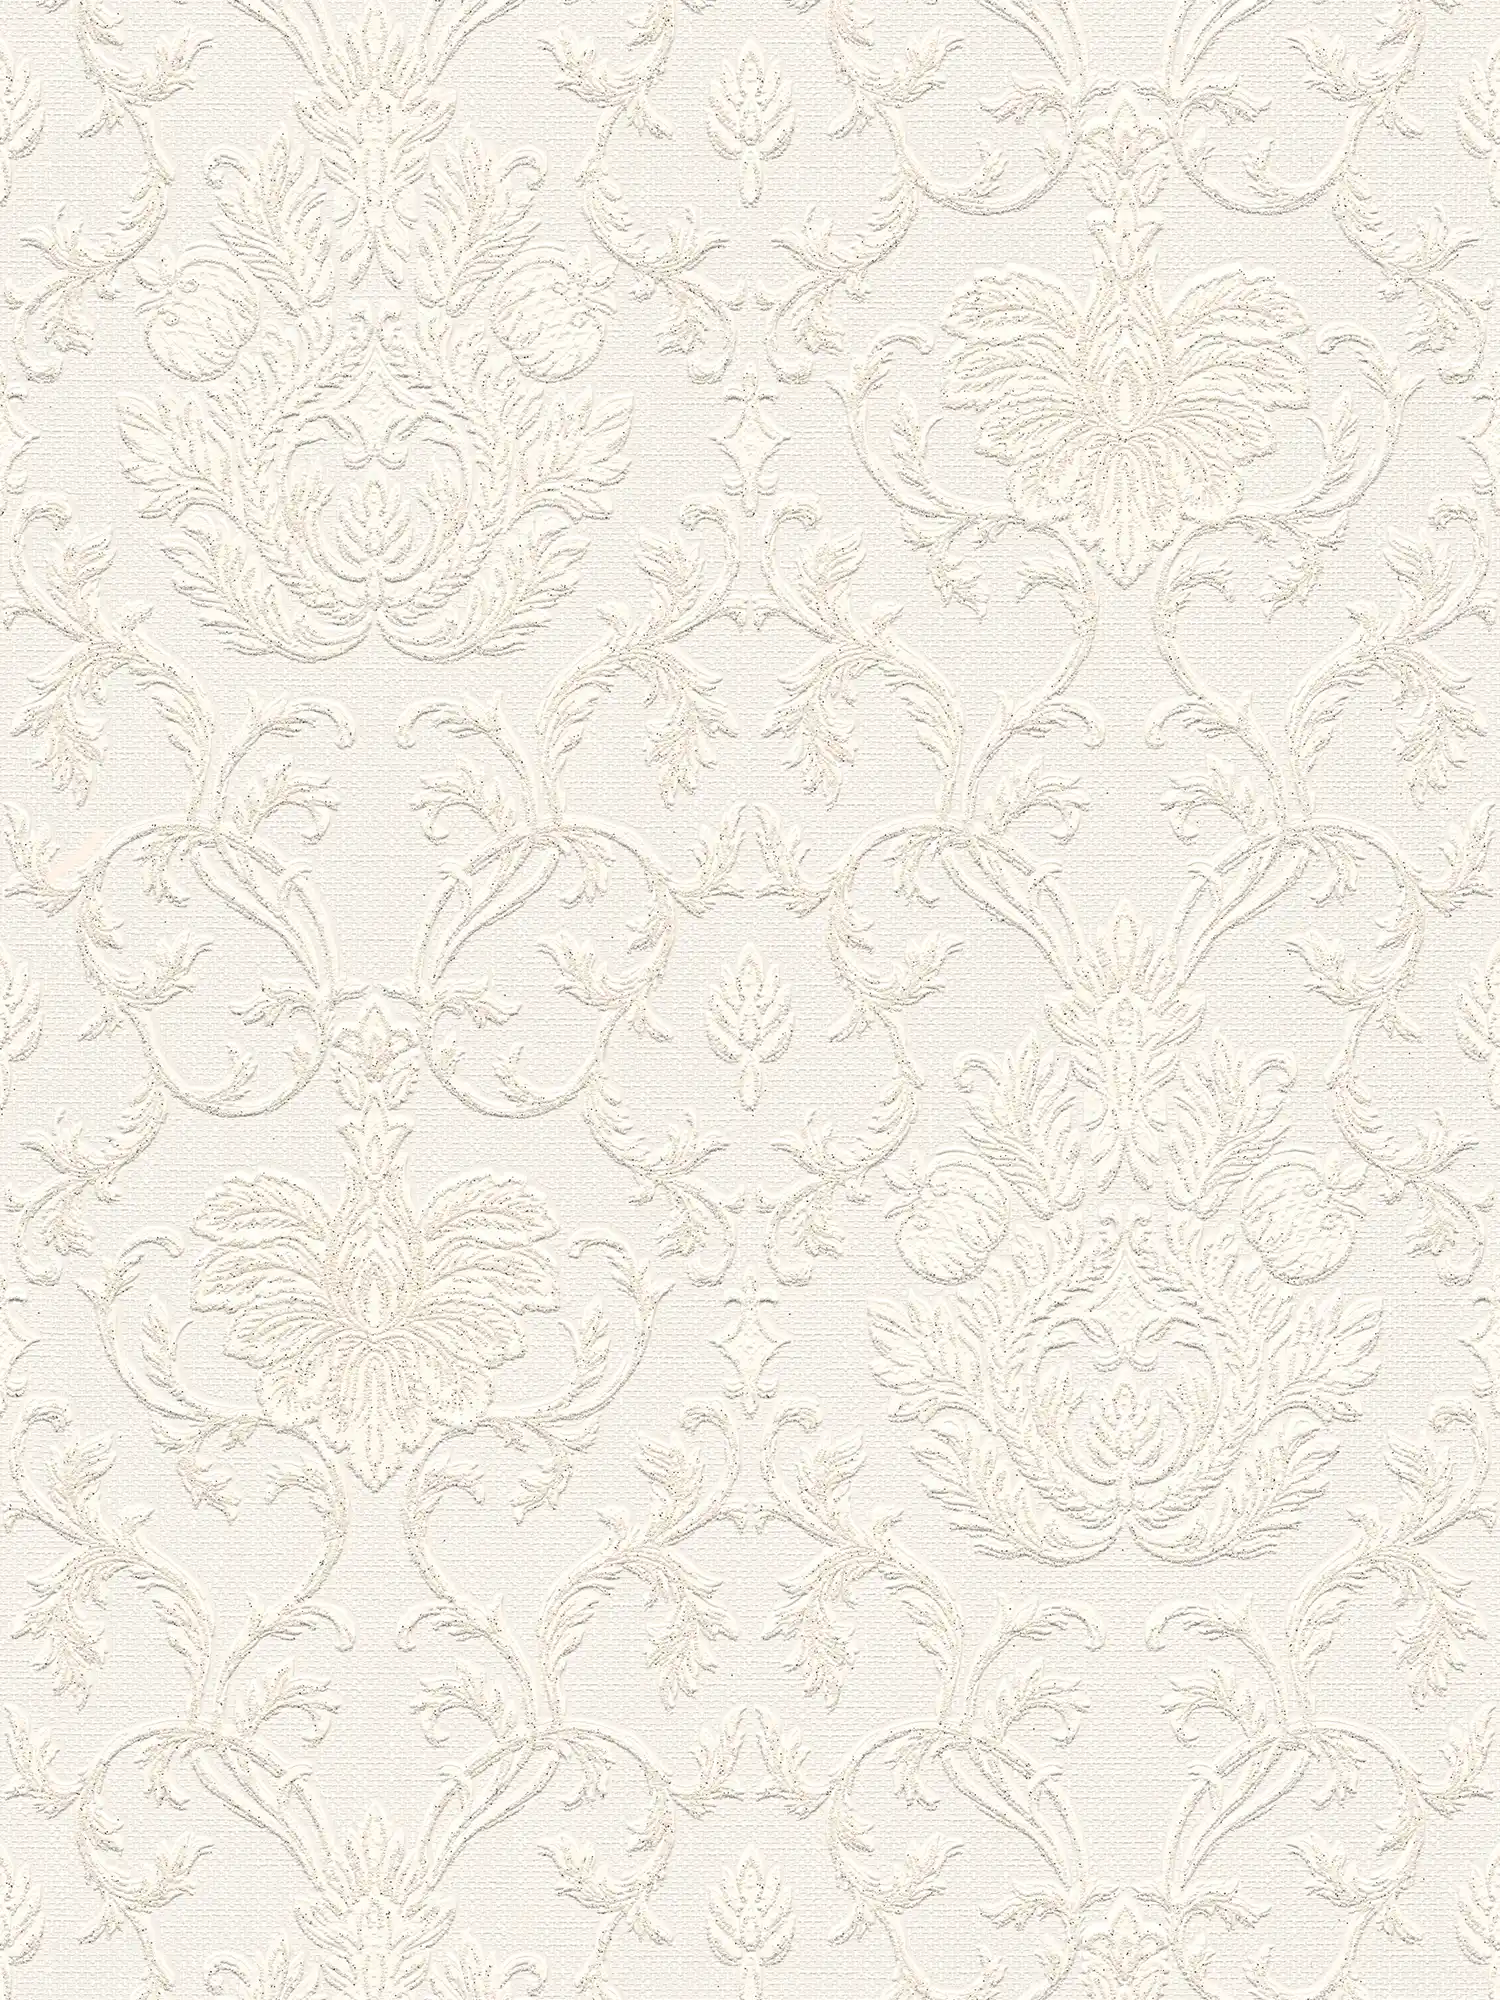         Glitter effect wallpaper with 3D ornament design - white
    